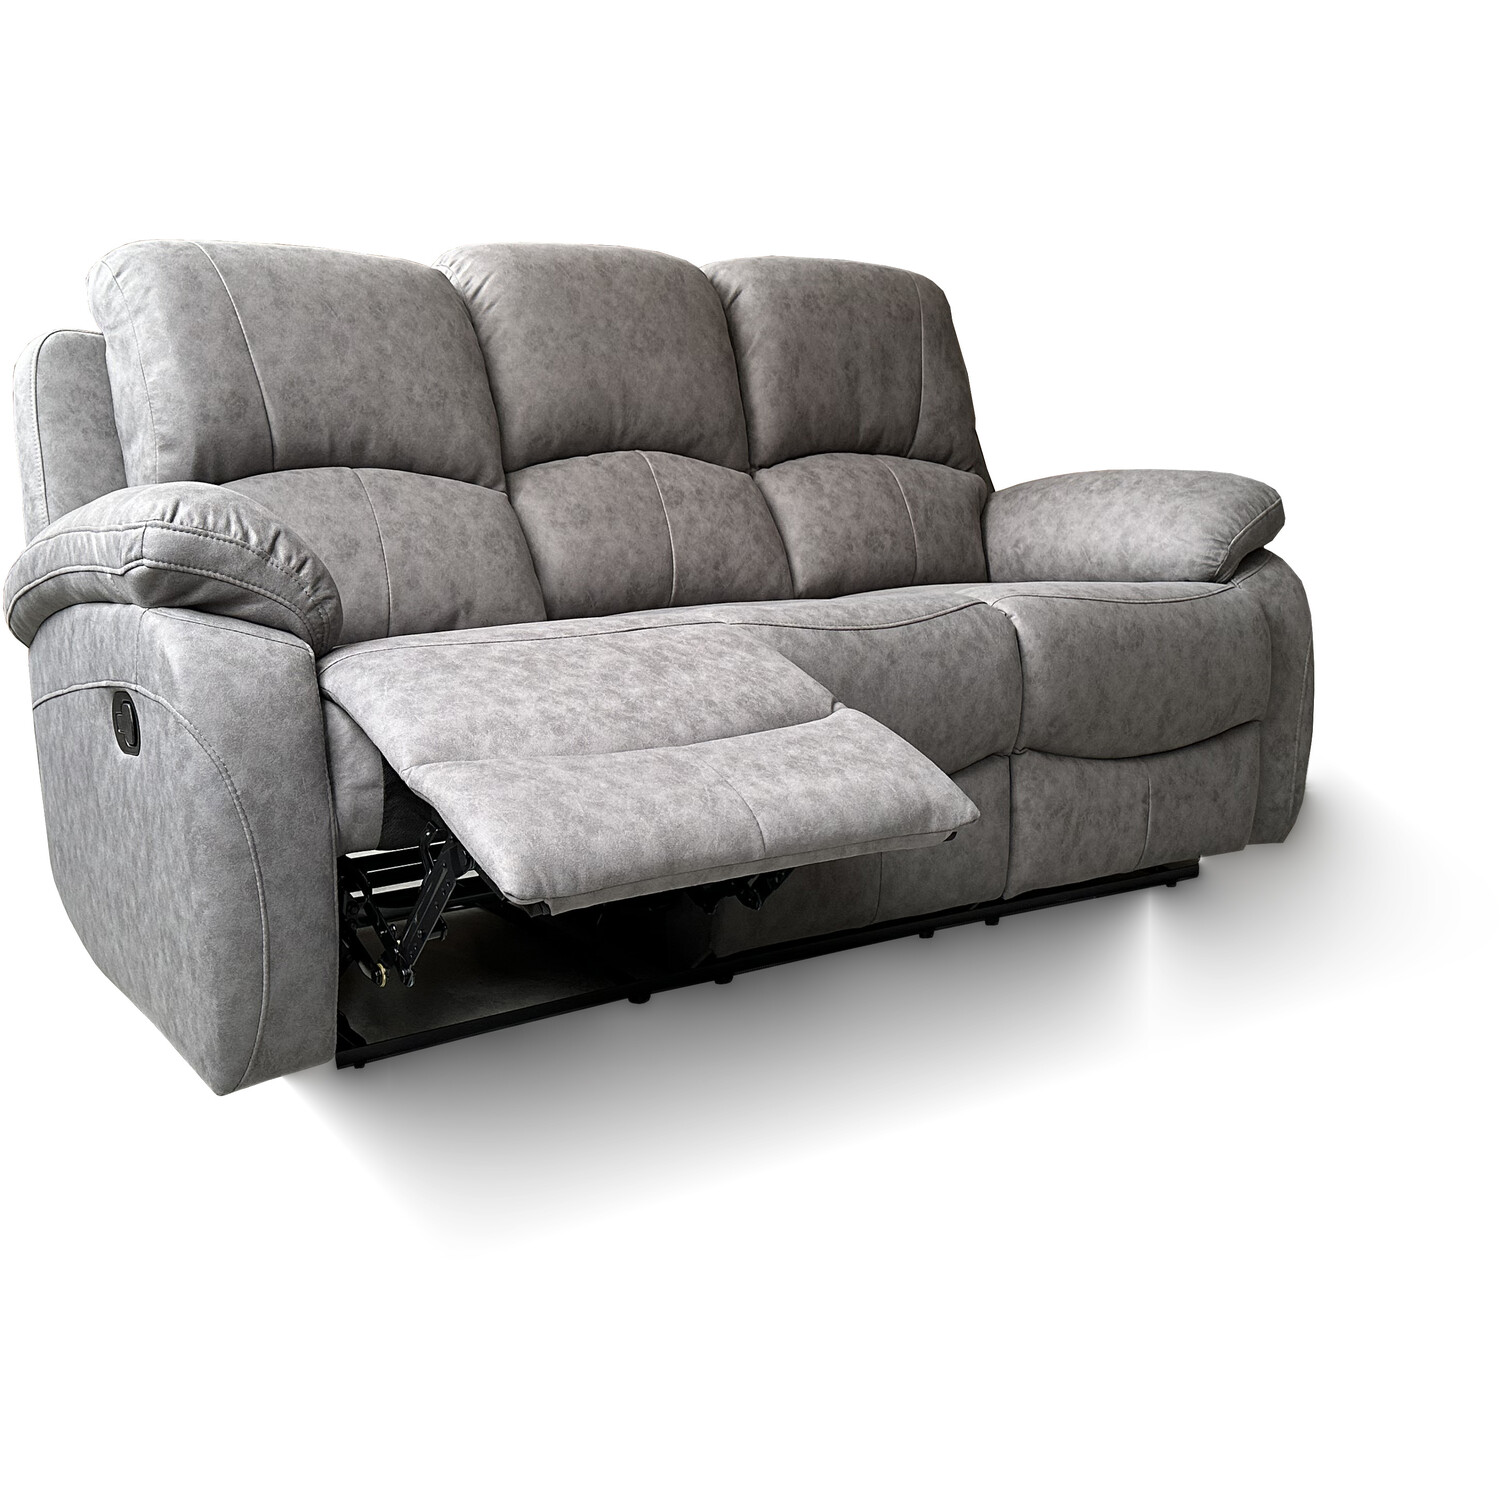 Milano 3 Seater Grey Fabric Recliner Sofa Image 2